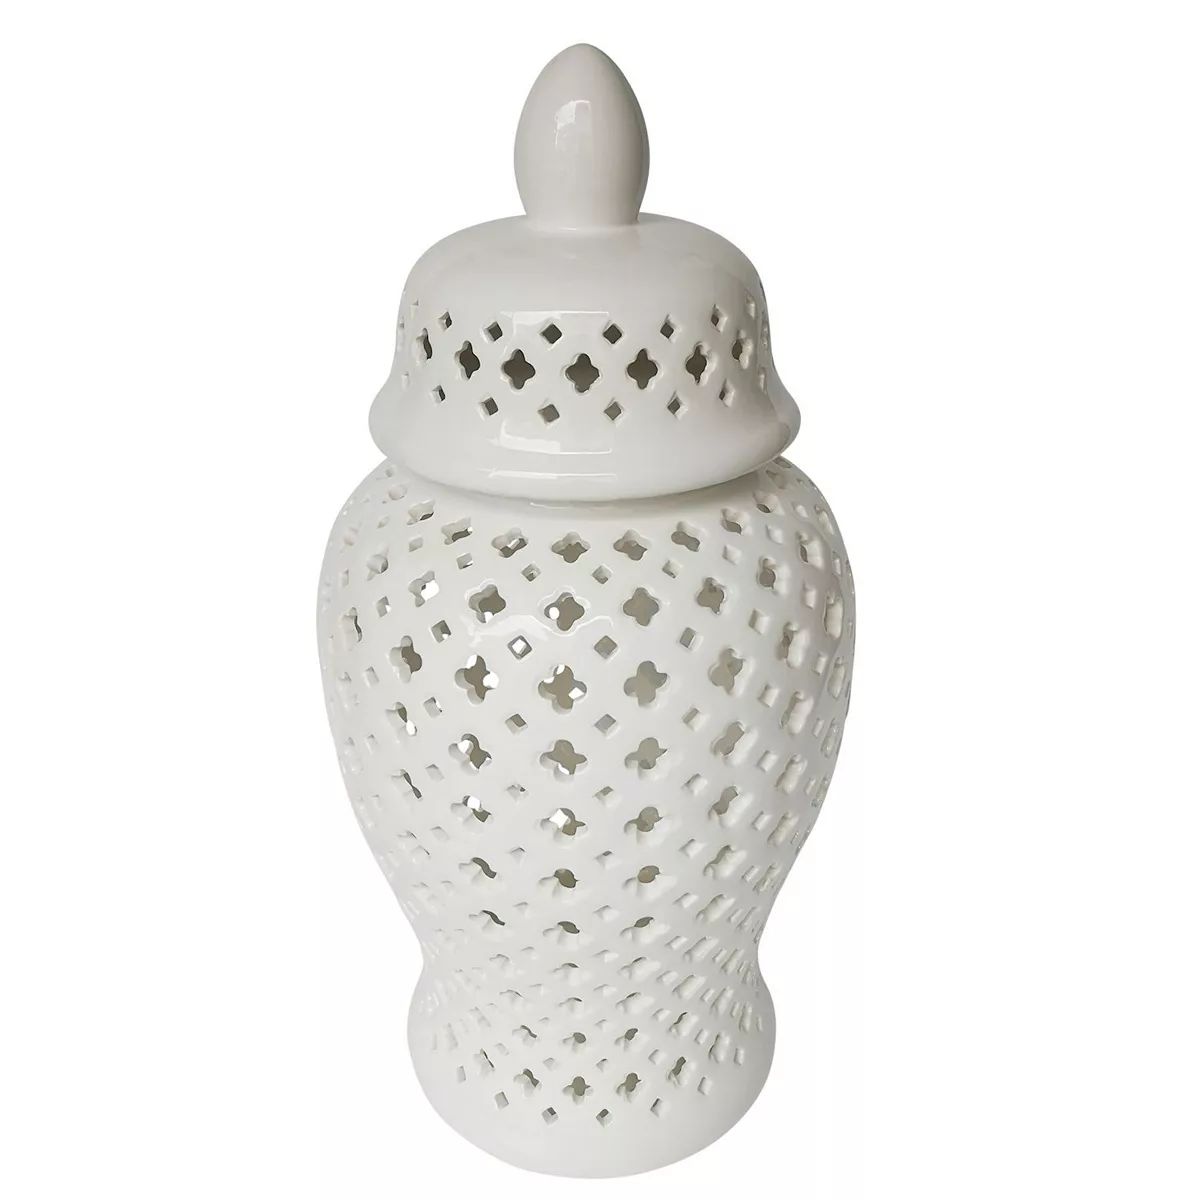 24" White Ceramic Cut Out Clover Temple Jar | Kohl's